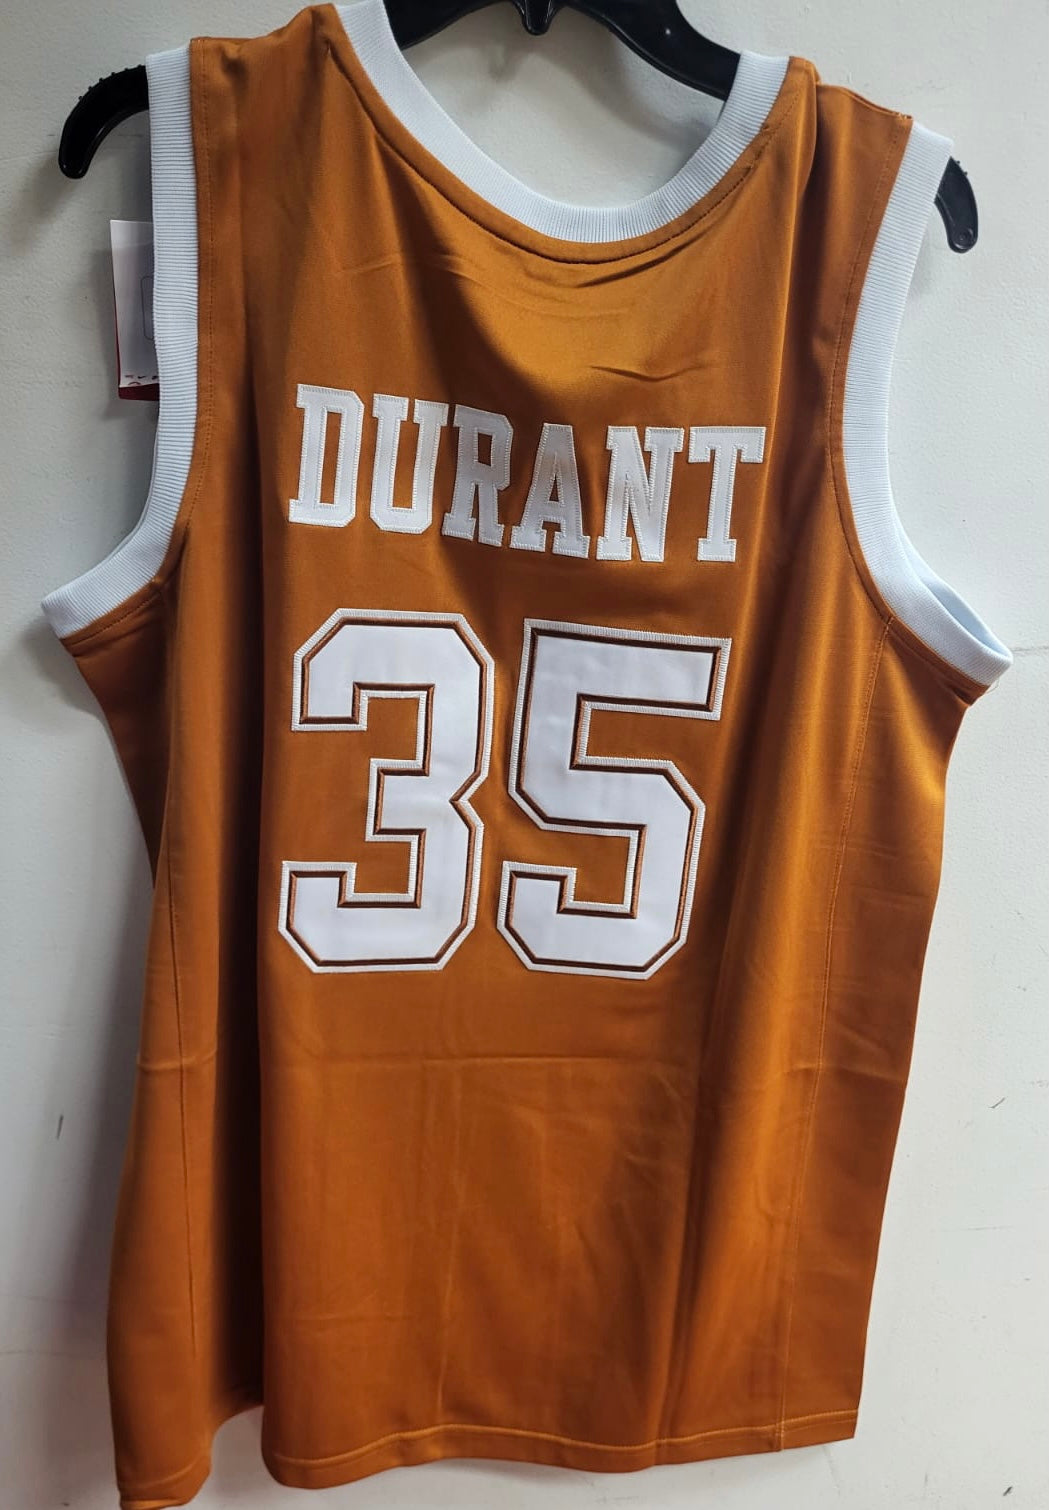 Kevin Durant Texas LongHorns College Basketball Jersey – Best Sports Jerseys